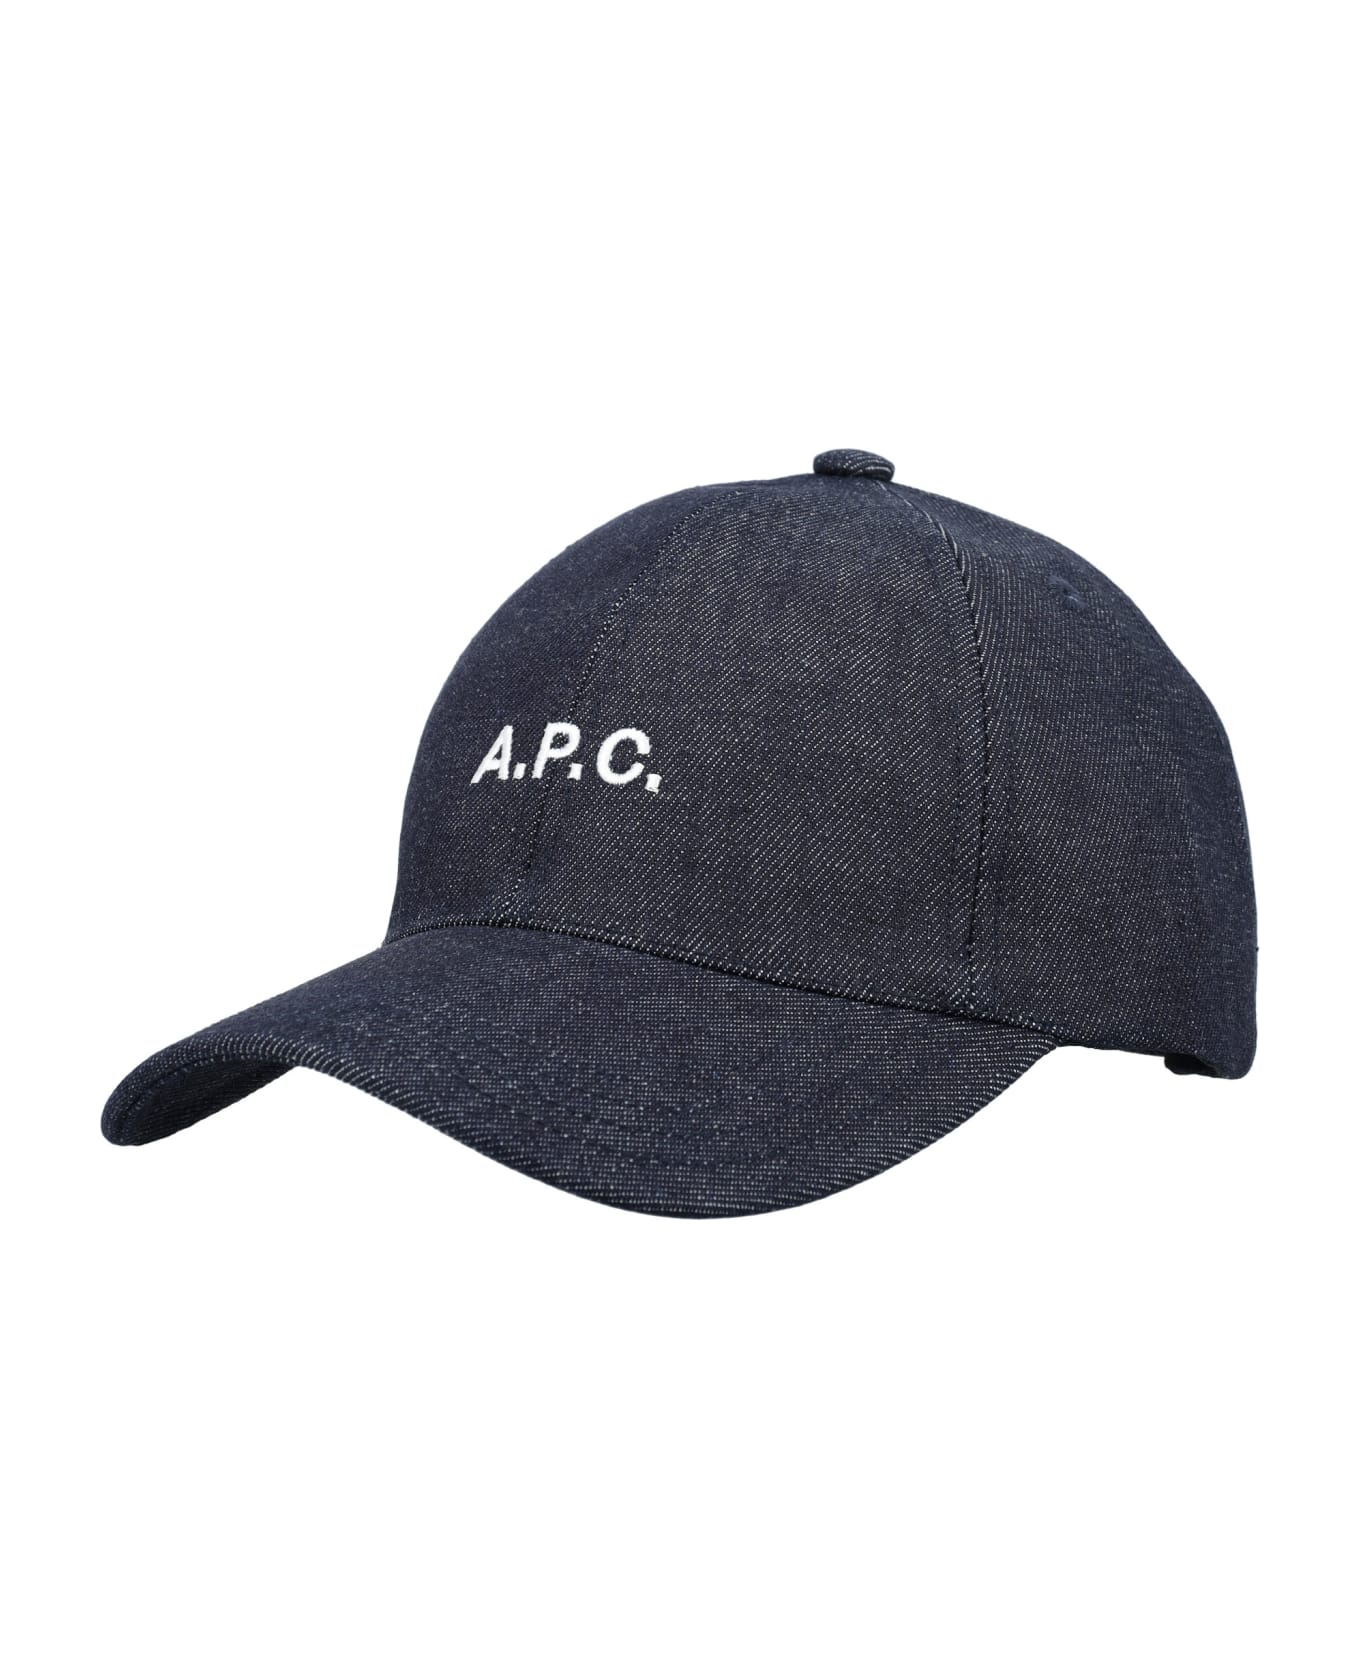 A.P.C. Charlie Hat - INDIGO